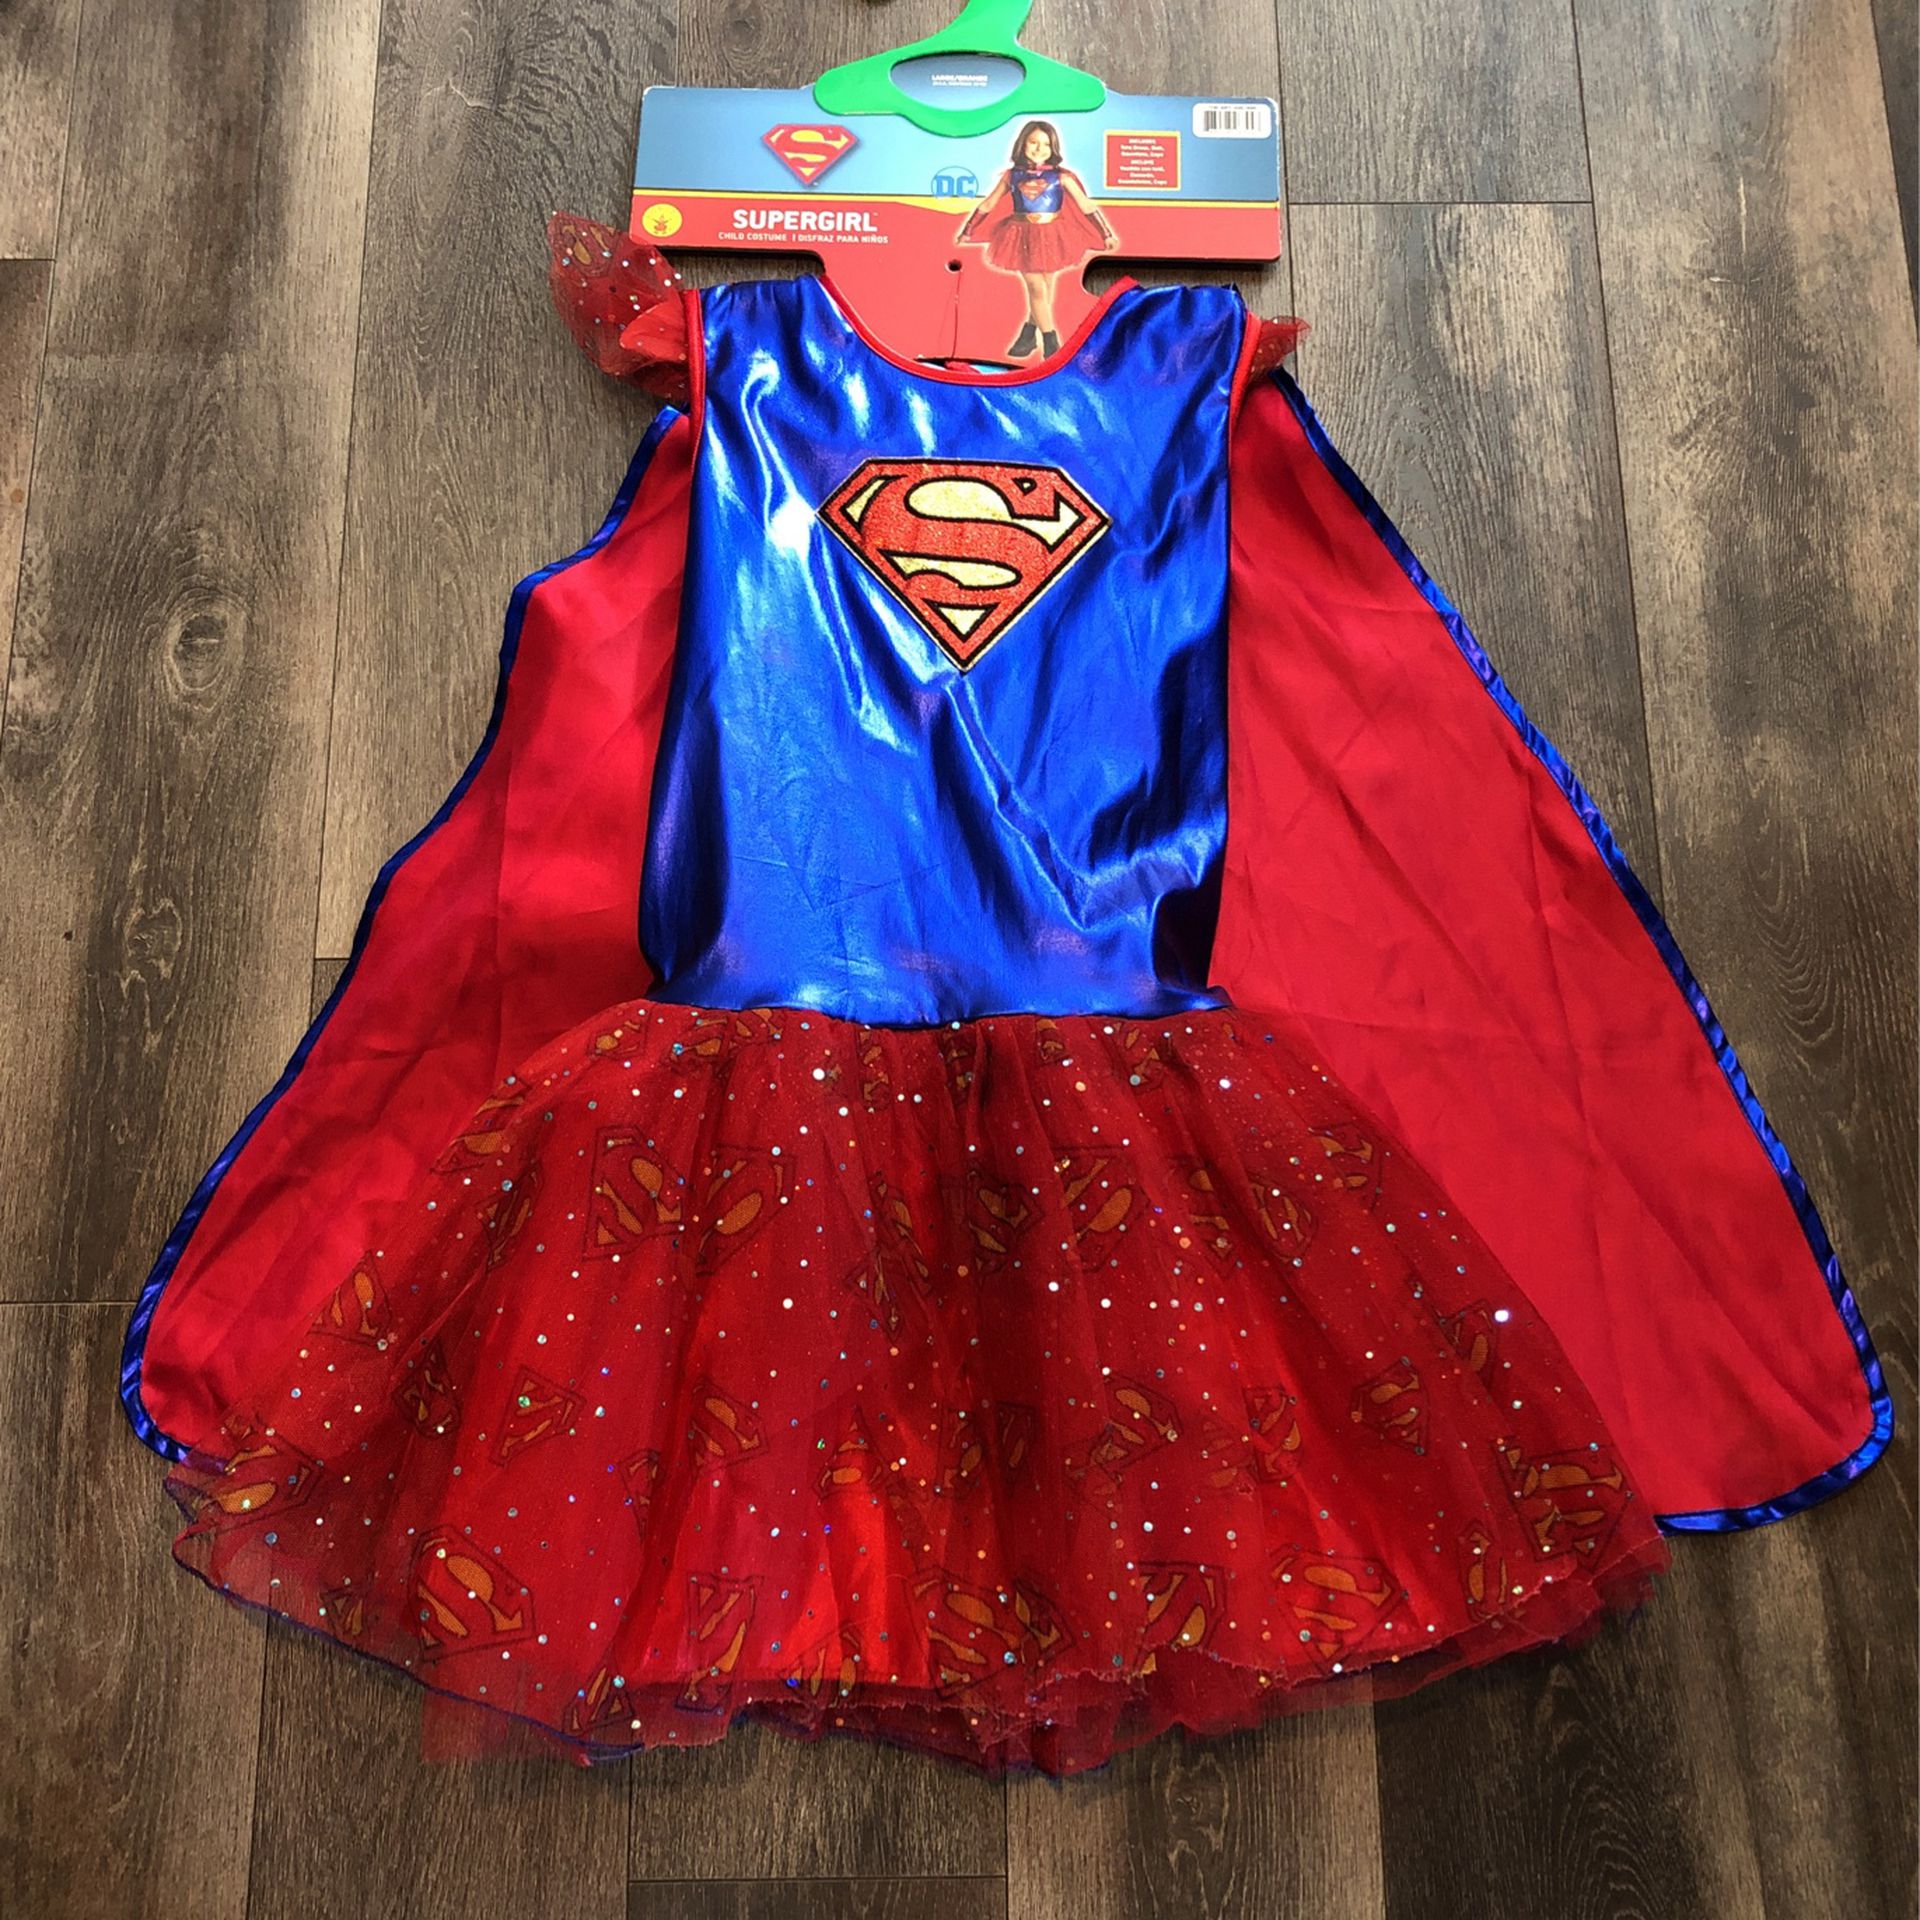 NEW Supergirl Kids Costume $25 OBO 